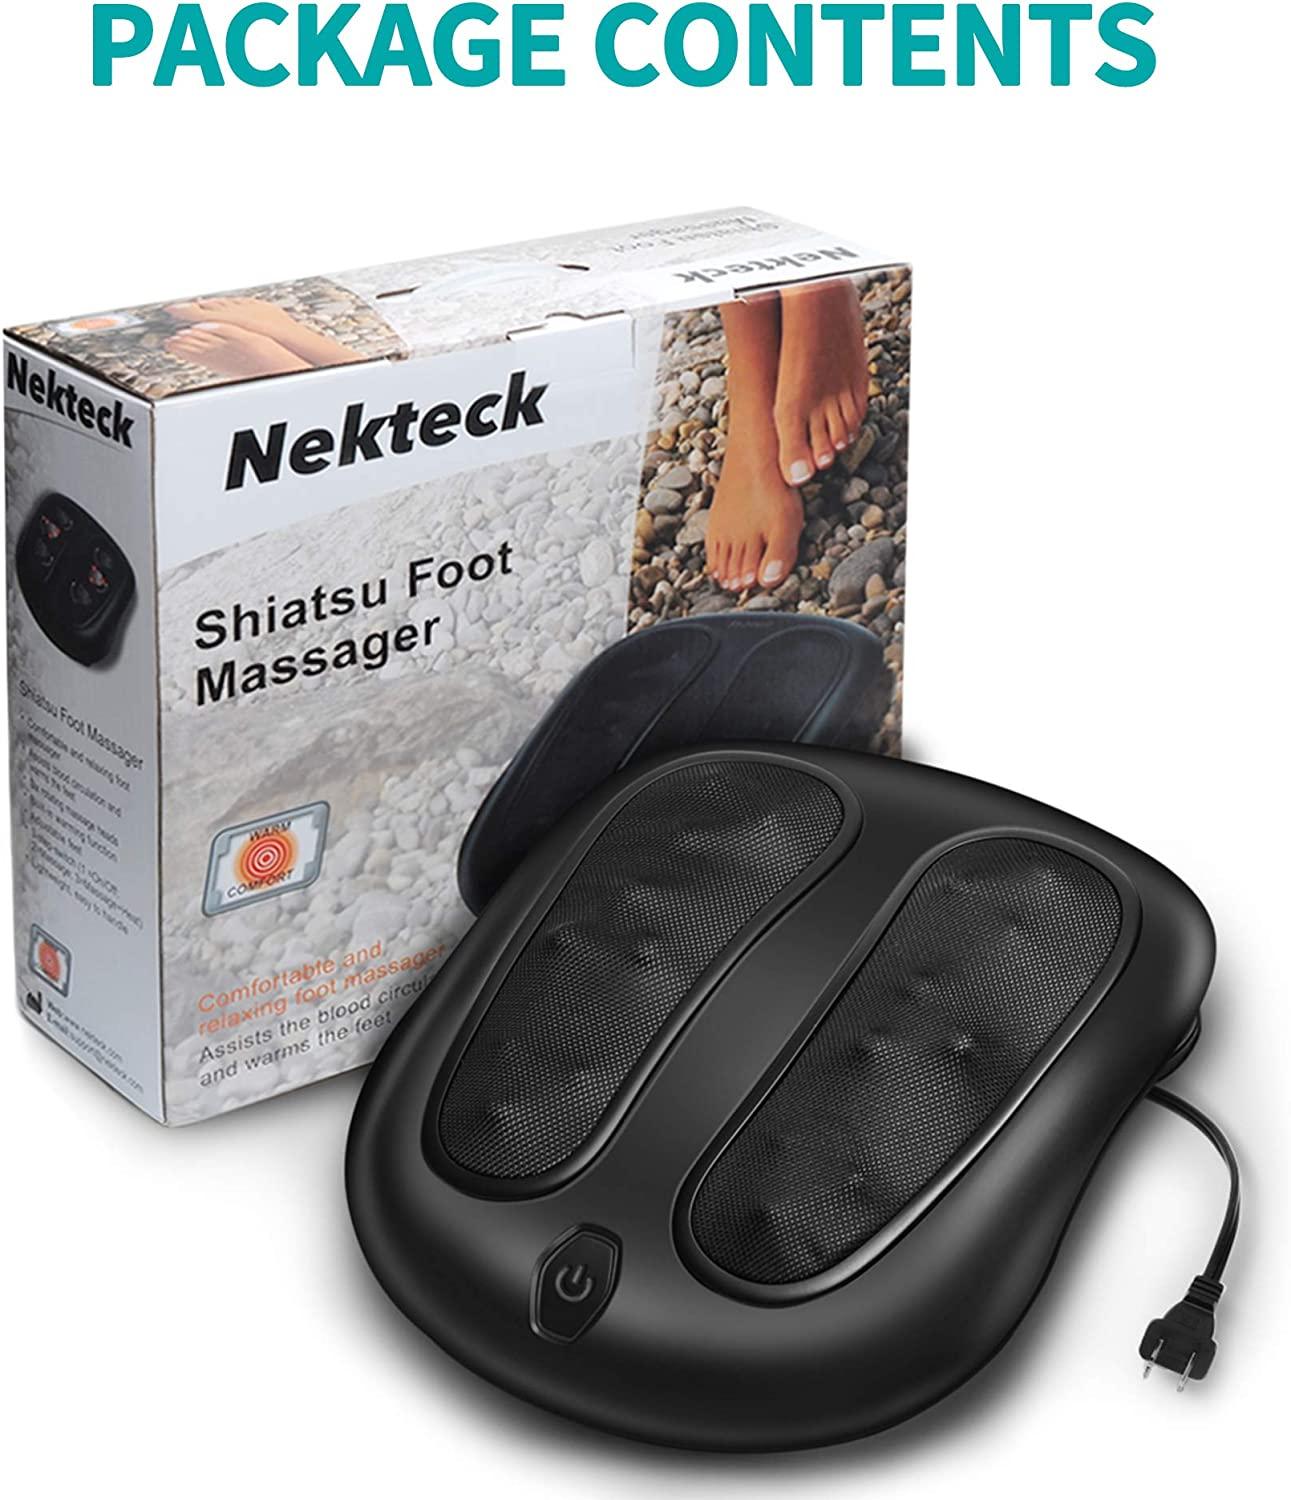 Nekteck Foot Massager with Heat, Shiatsu Heated Electric Kneading